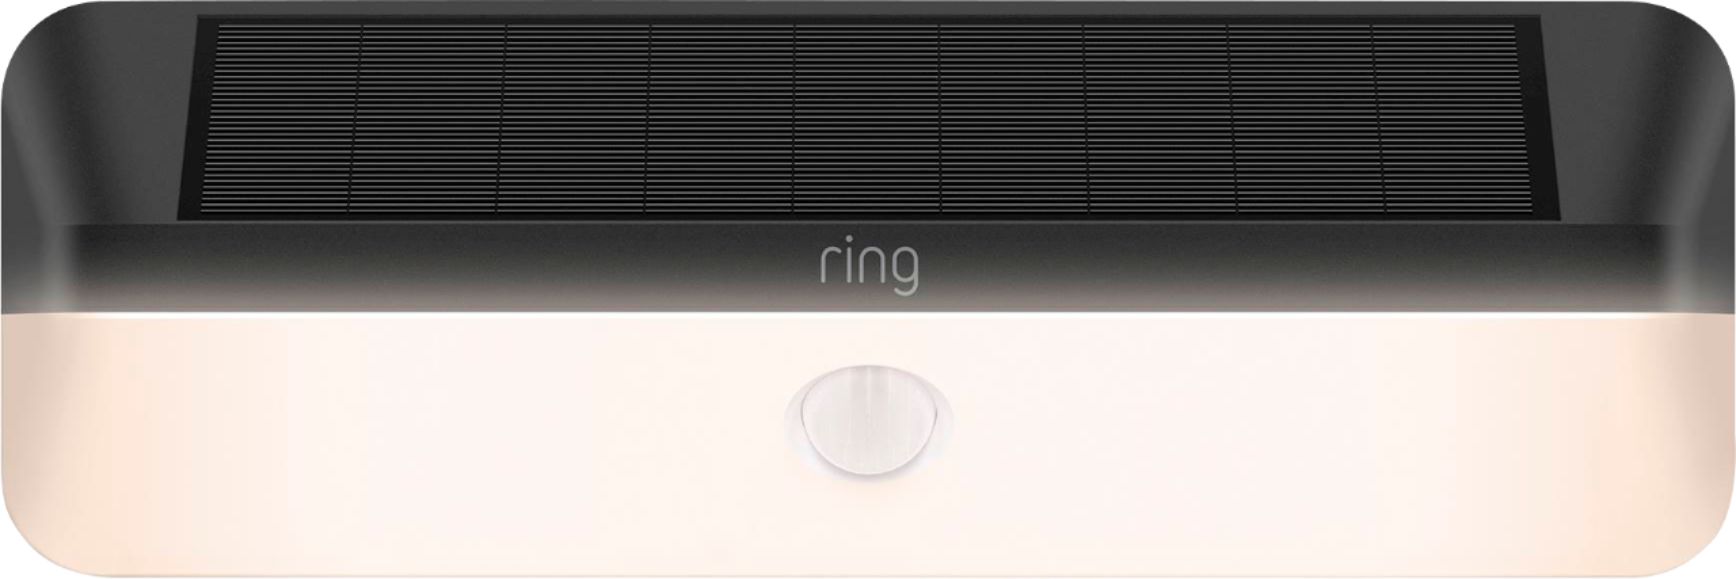 Ring Outdoor Smart Plug Black B08KSJ56WR - Best Buy